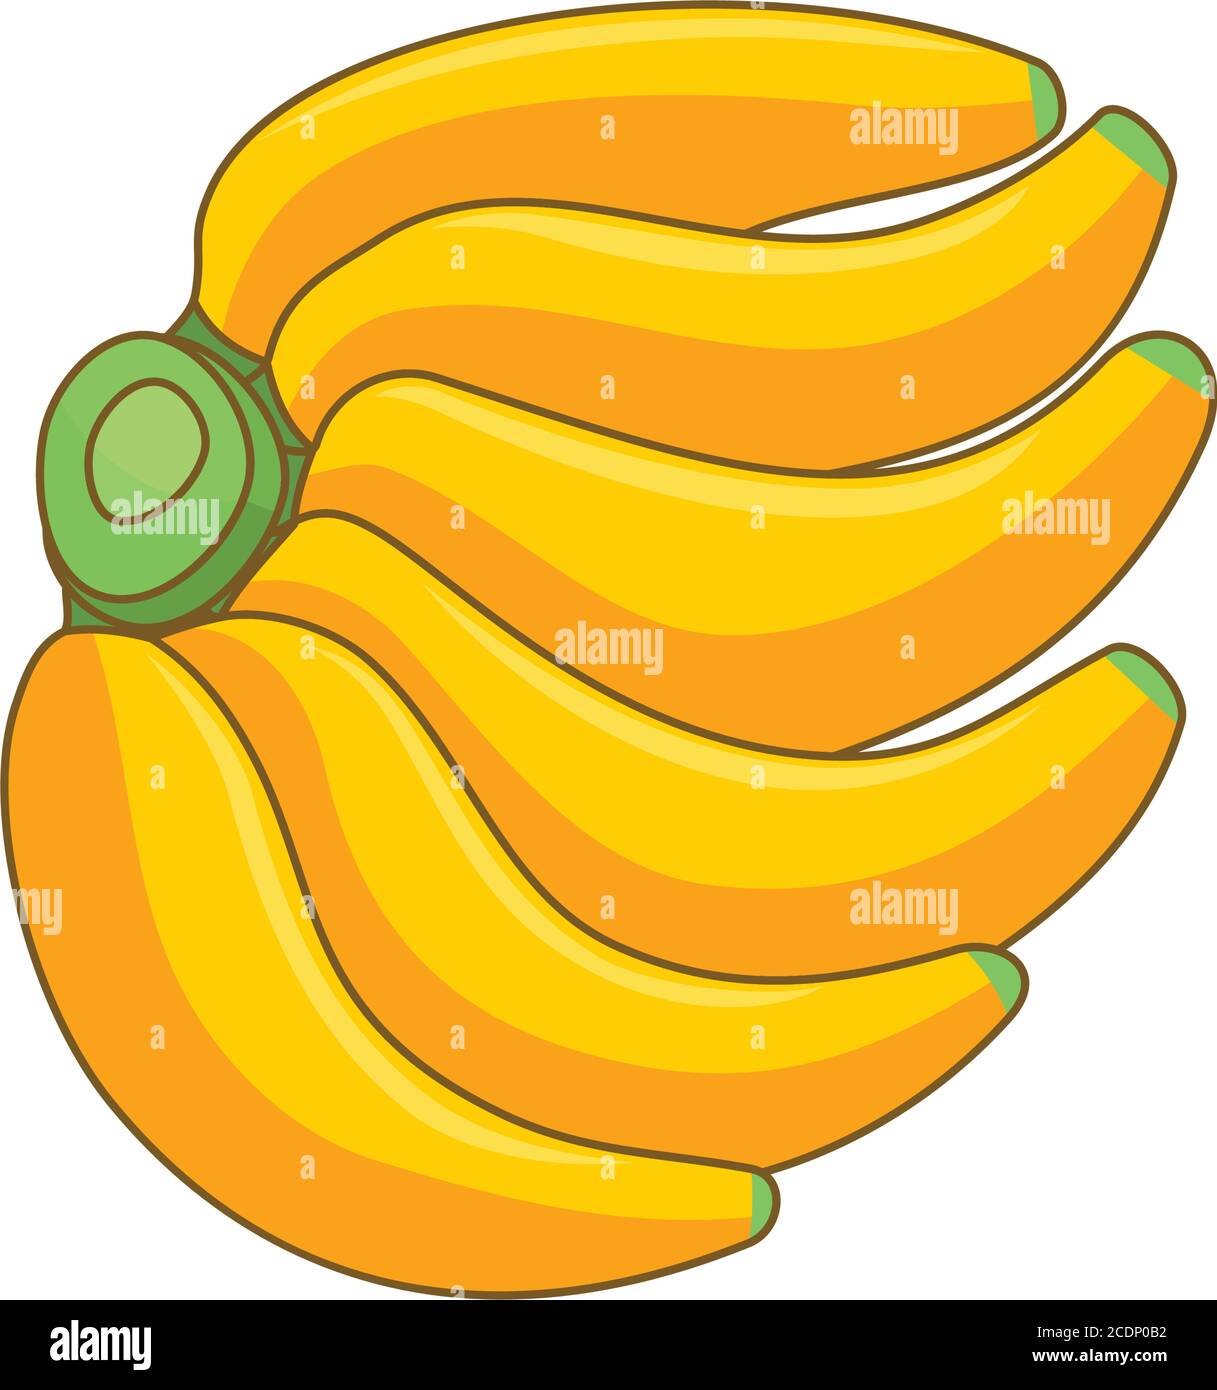 Cartoon bananas. Peel banana, yellow fruit and bunch of bananas. Tropical  fruits, banana snack or vegetarian nutrition. Isolated vector illustration  i Stock Vector Image & Art - Alamy